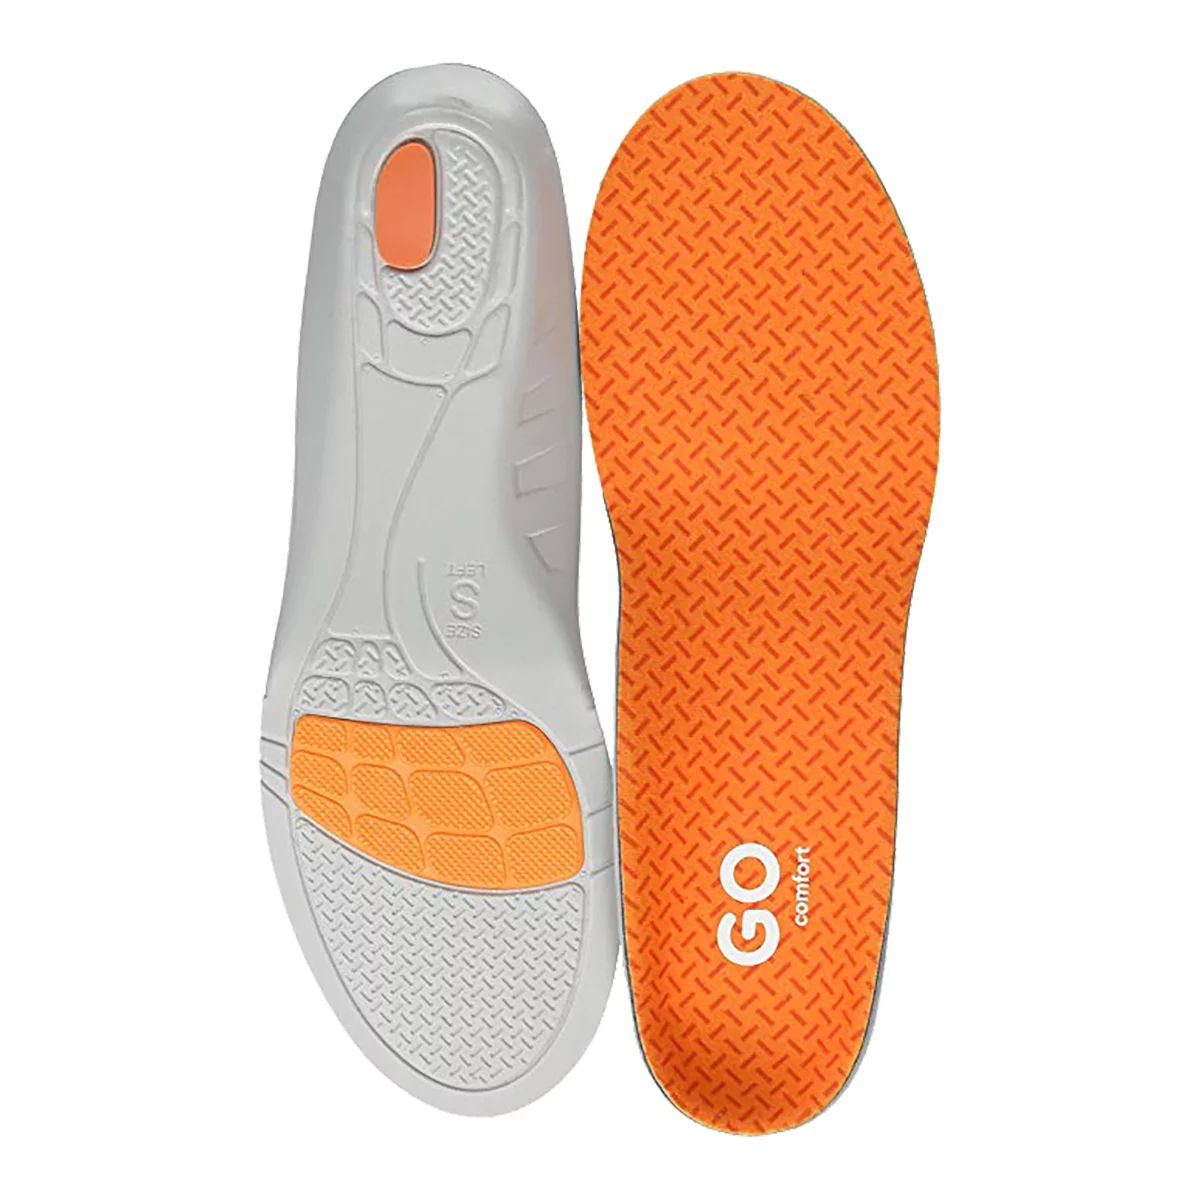 Superfeet GO Comfort Work Insoles  Shoe Inserts